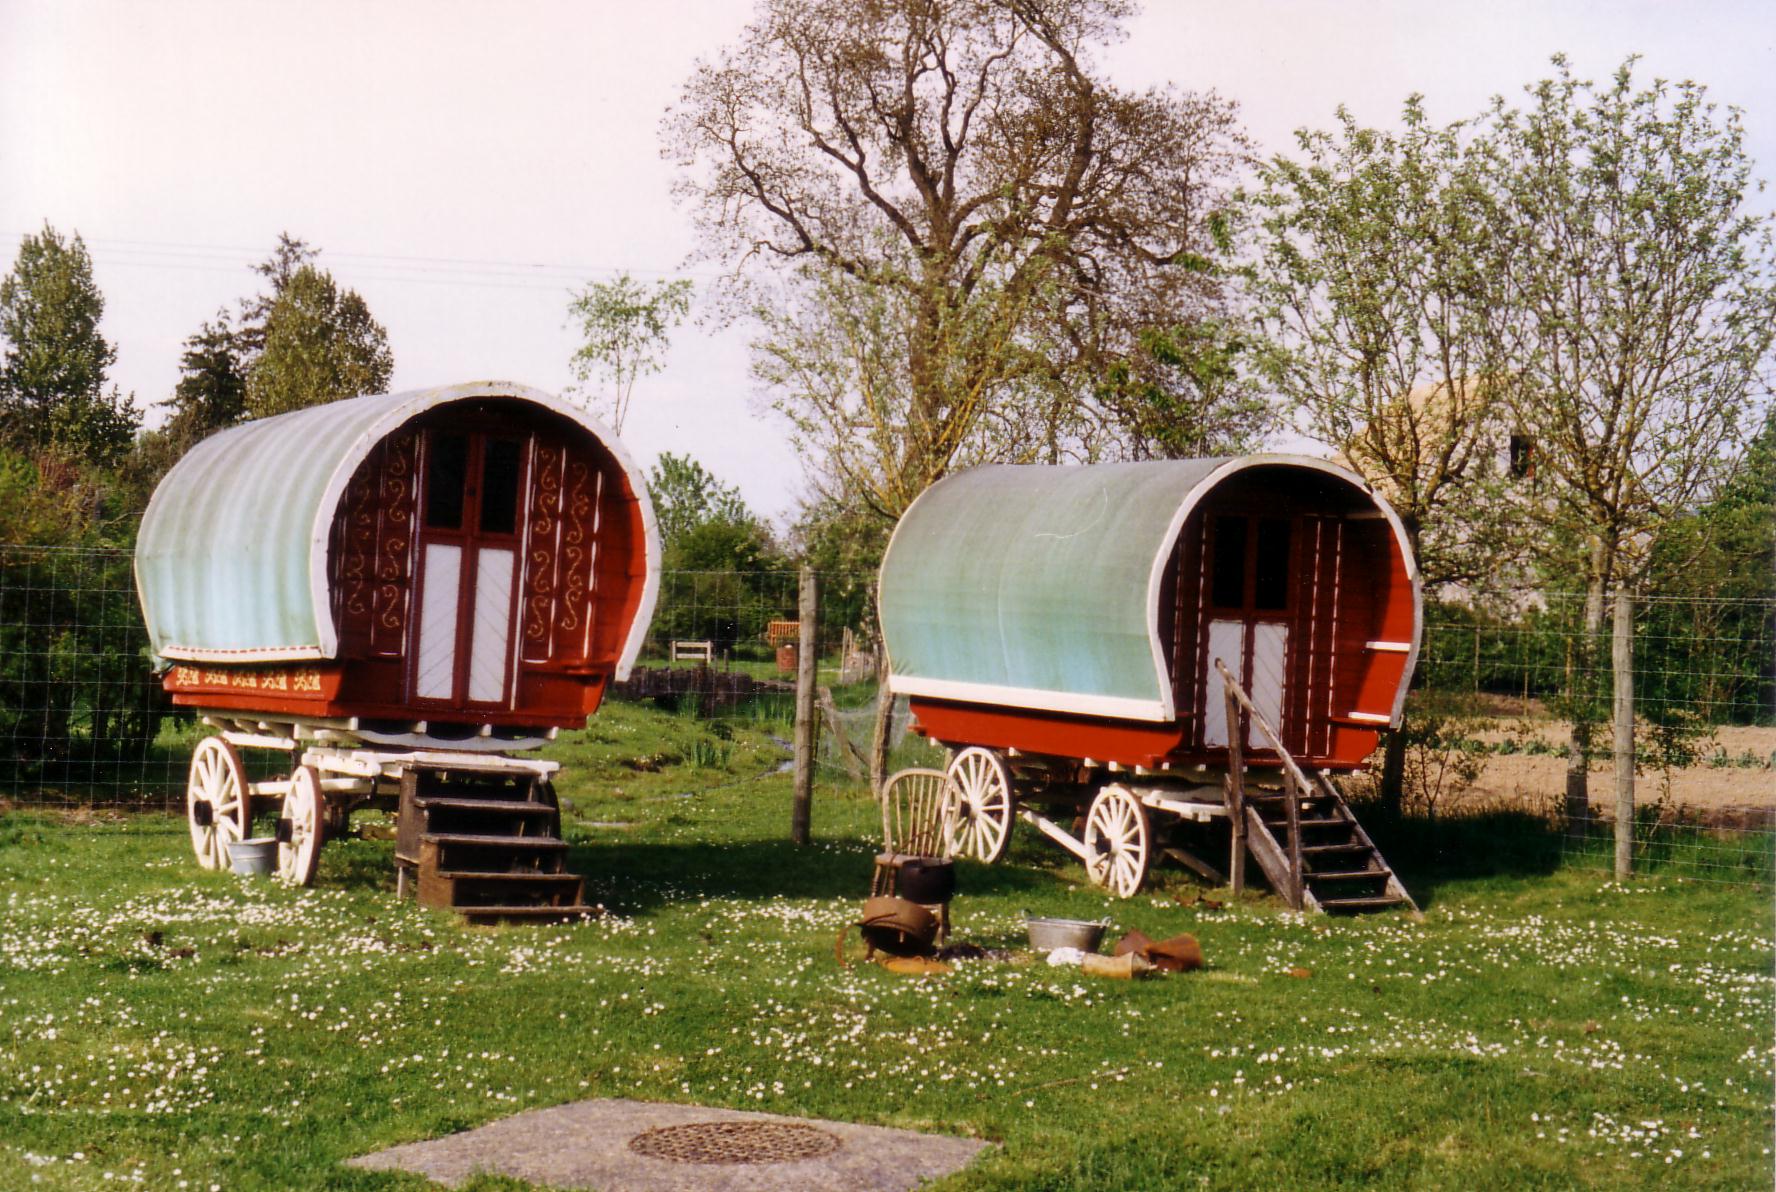 Gypsy caravans at Bunratty Folk Park